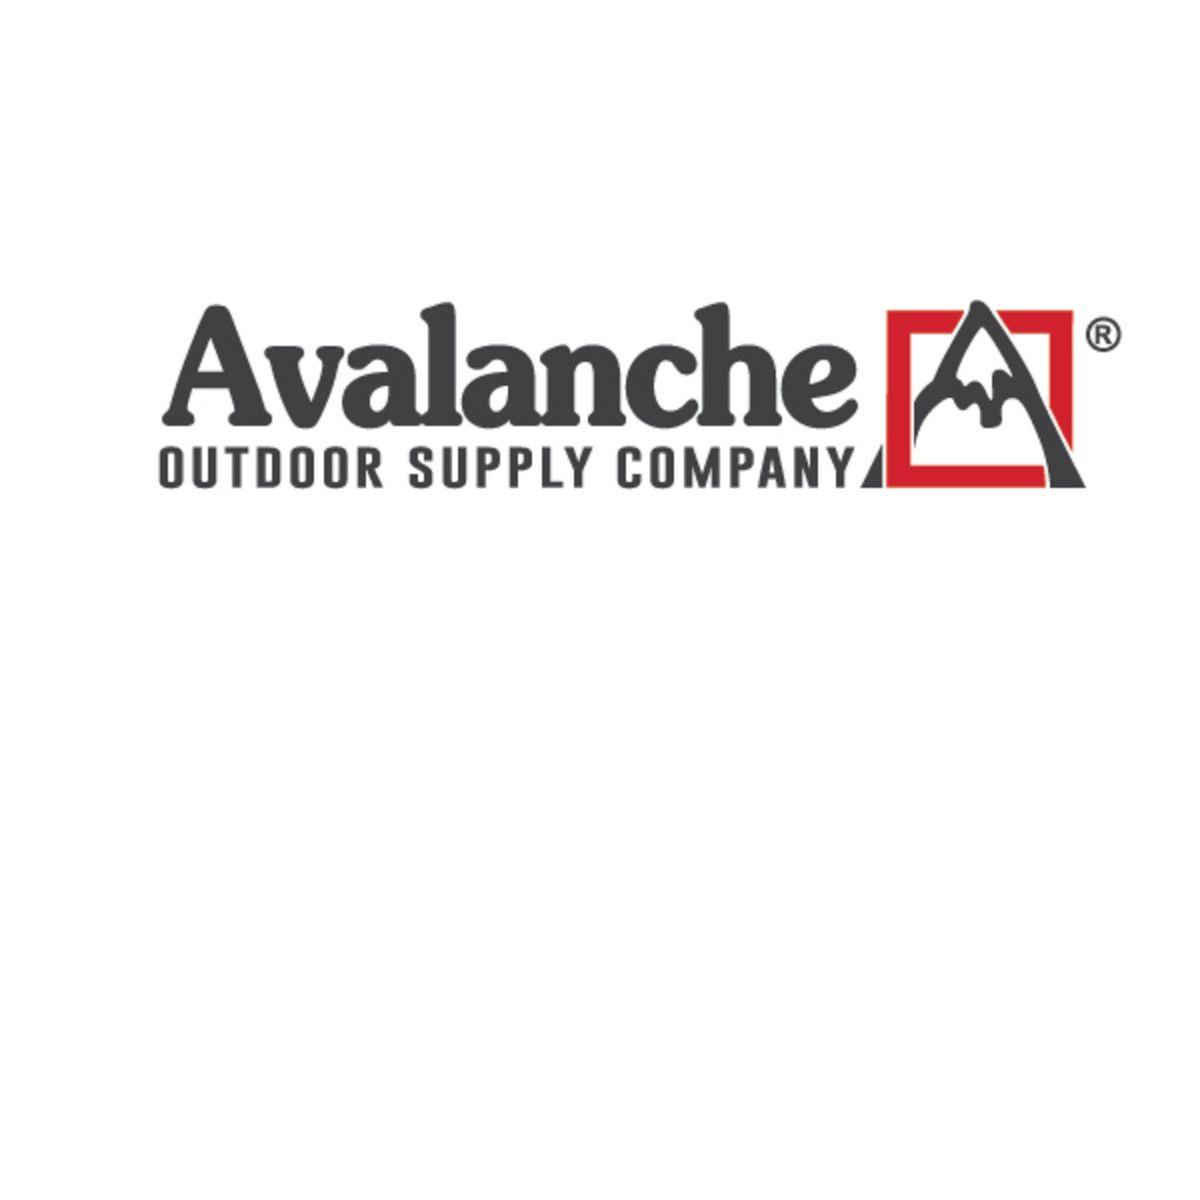 Avalance Logo - Avalanche Introduces Polygiene Baselayers for Fall 2018 - SNEWS